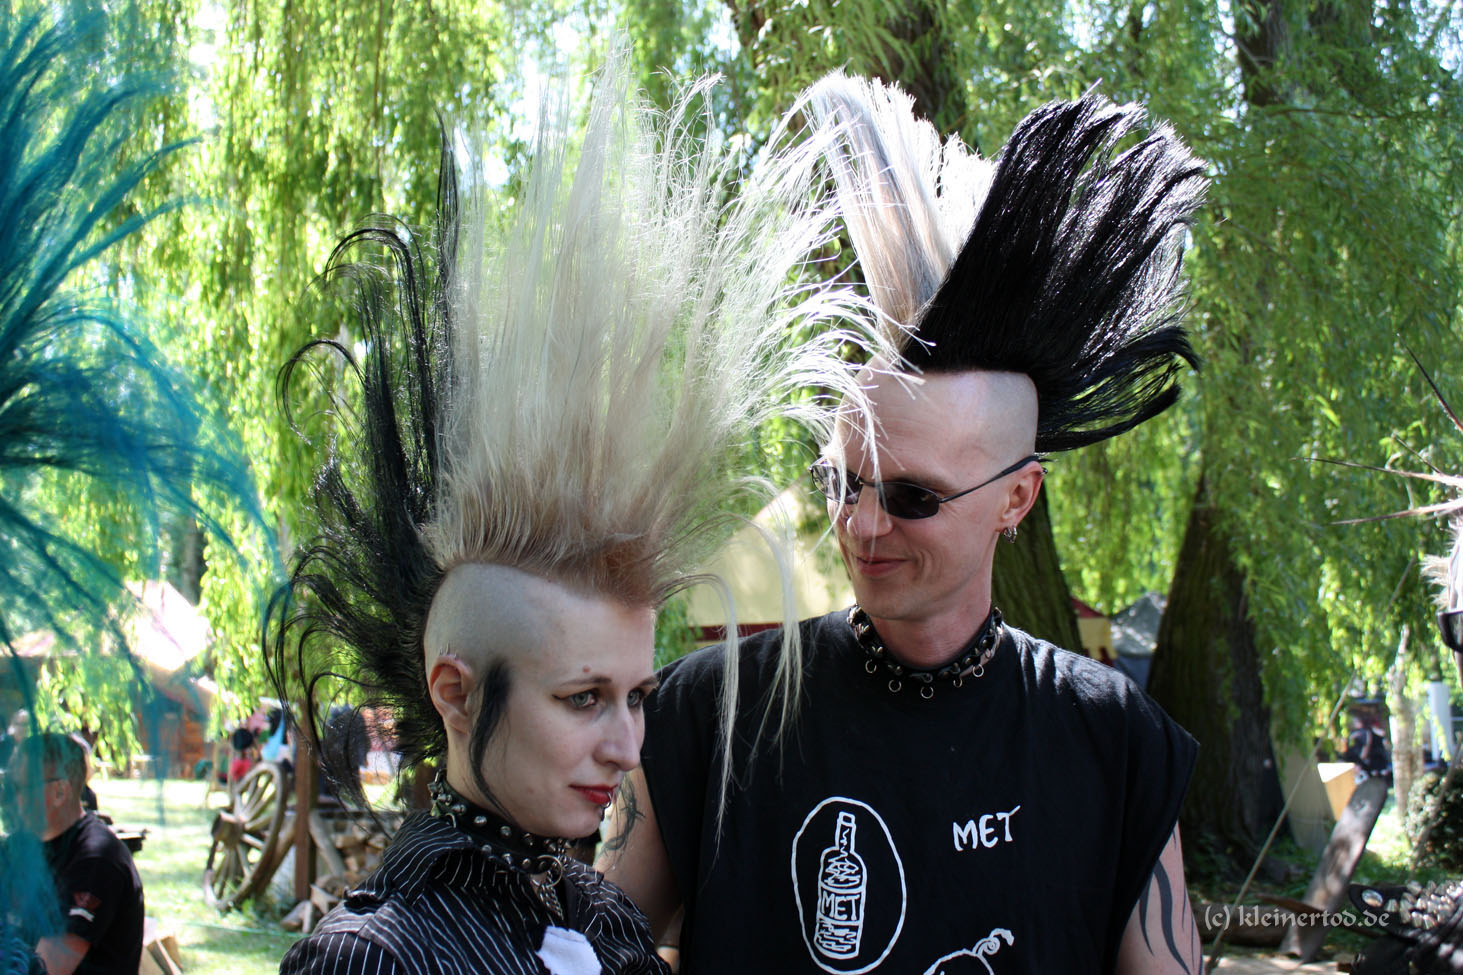 Wave-Gotik-Treffen: The Biggest Goth Festival On The Planet • Lazer Horse